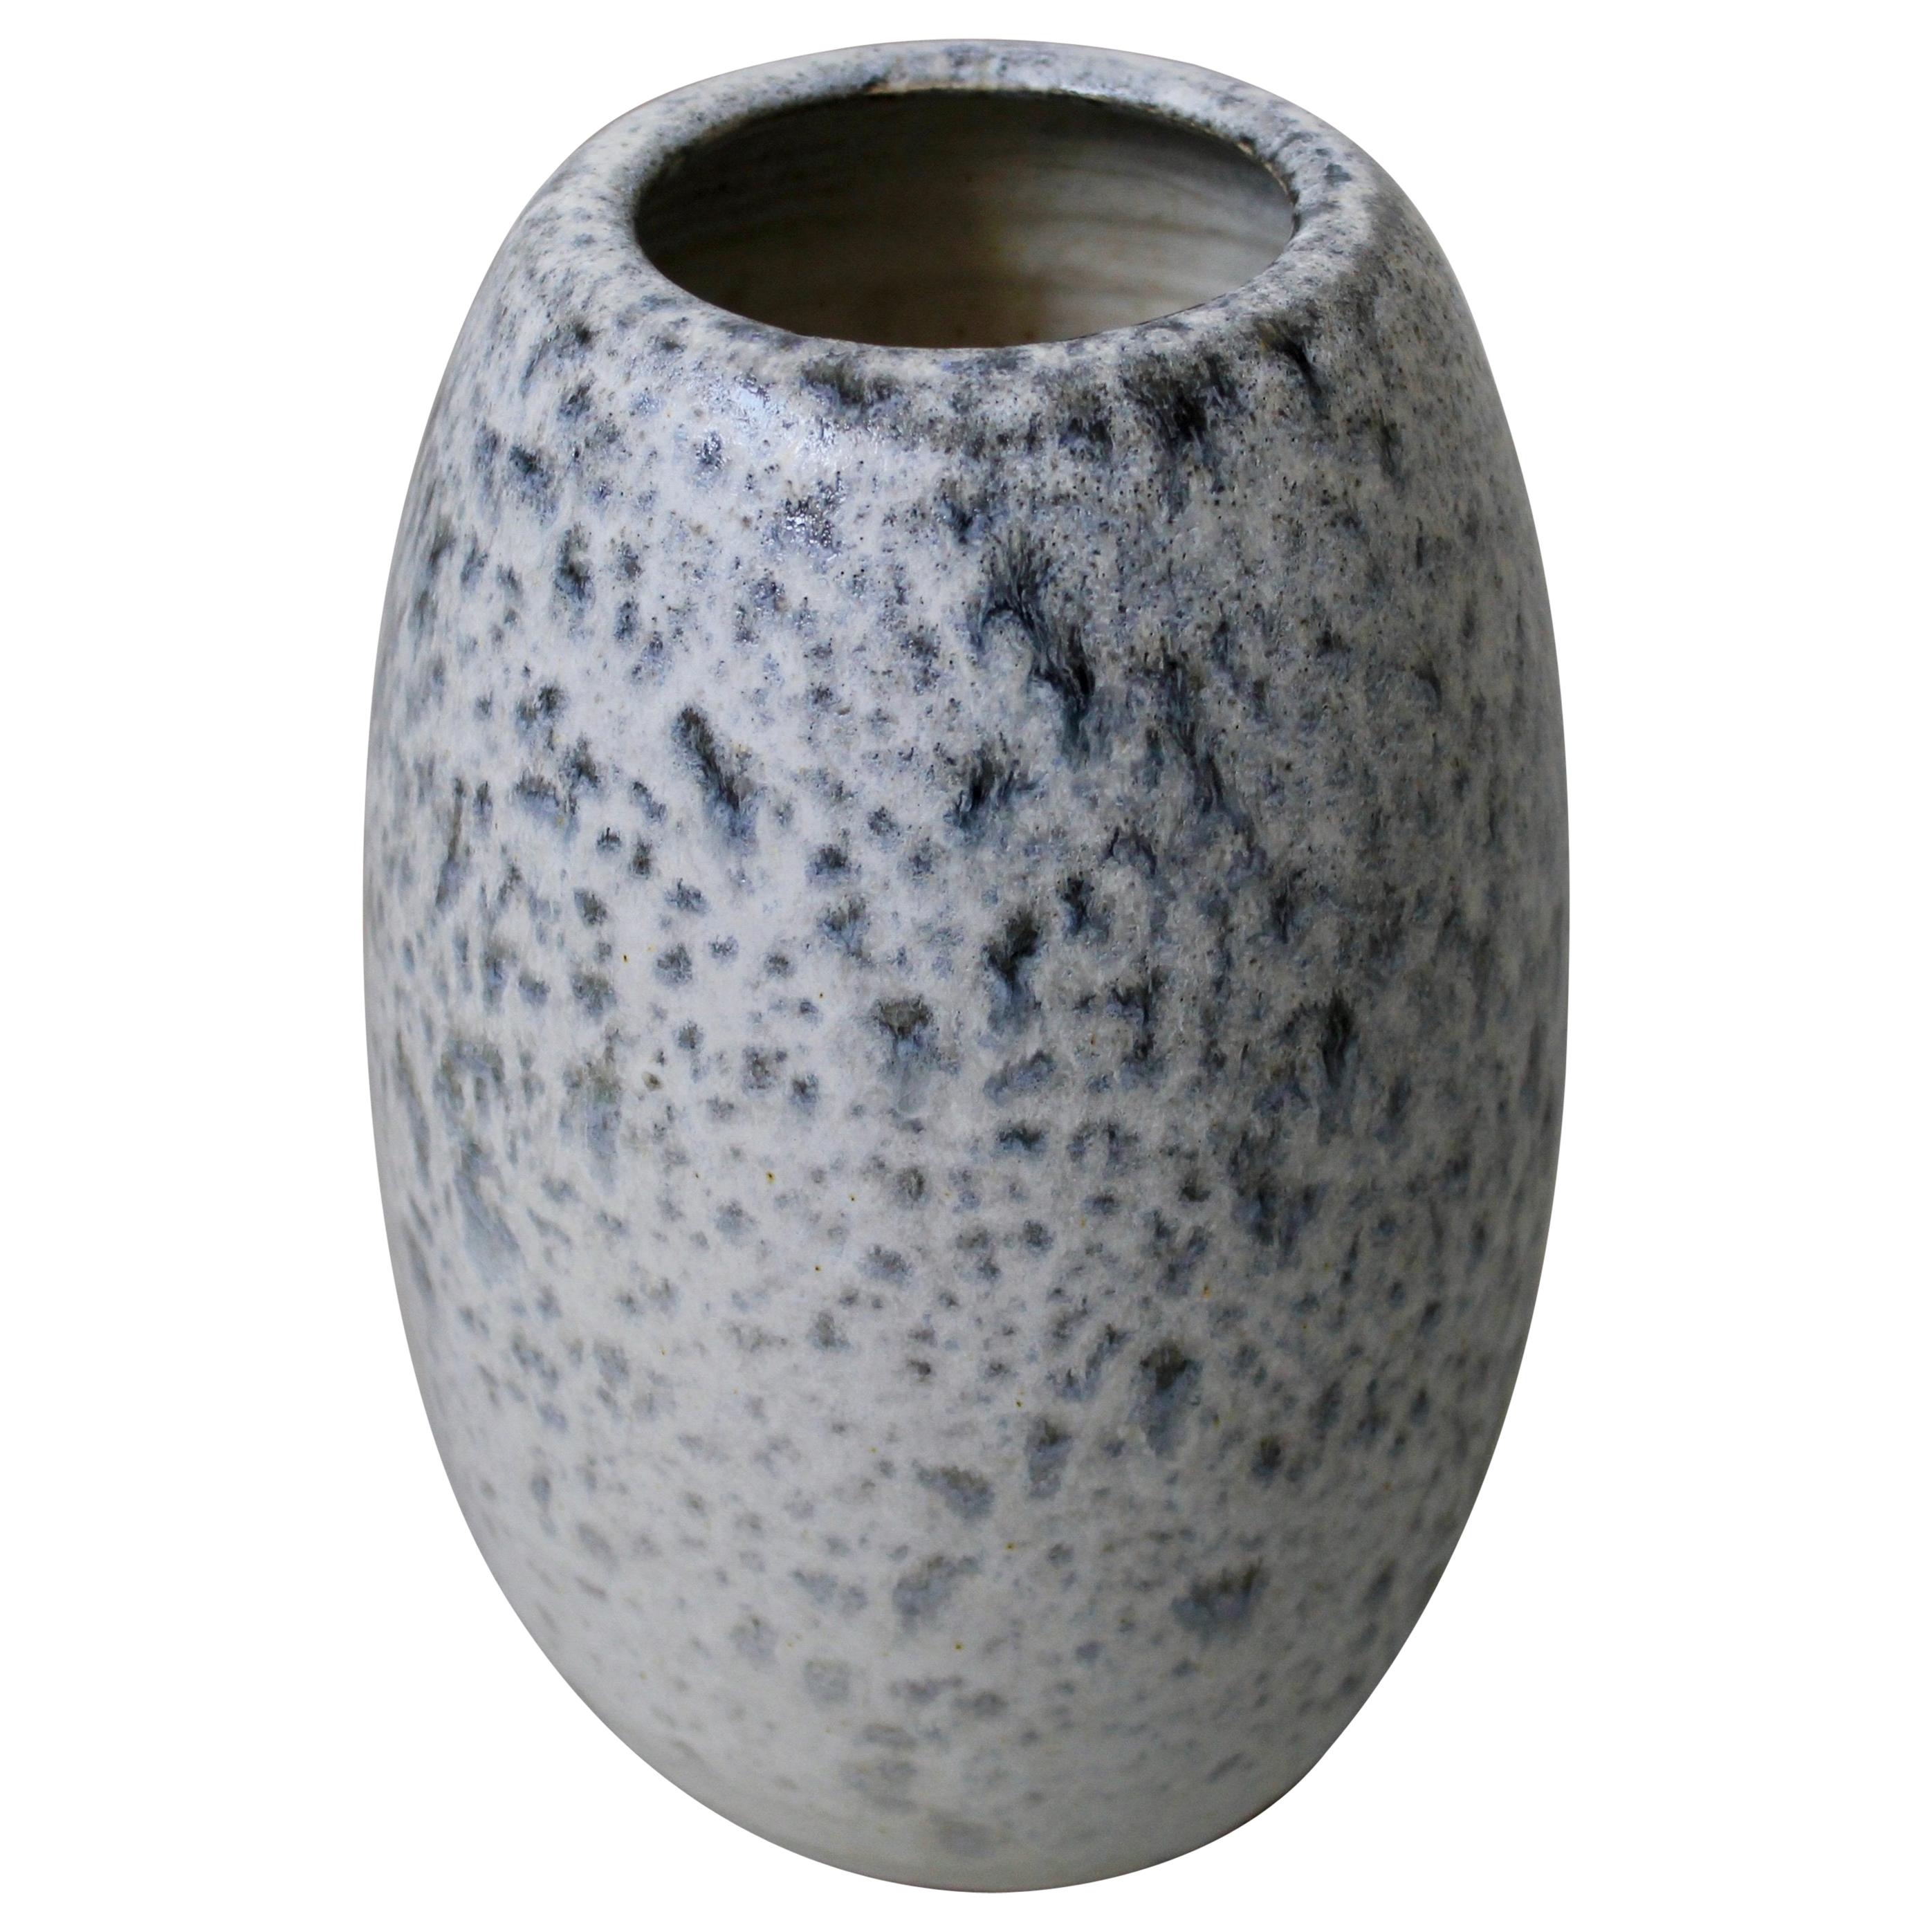 KH Würtz Ovoid Vase in Stone Blue Glaze